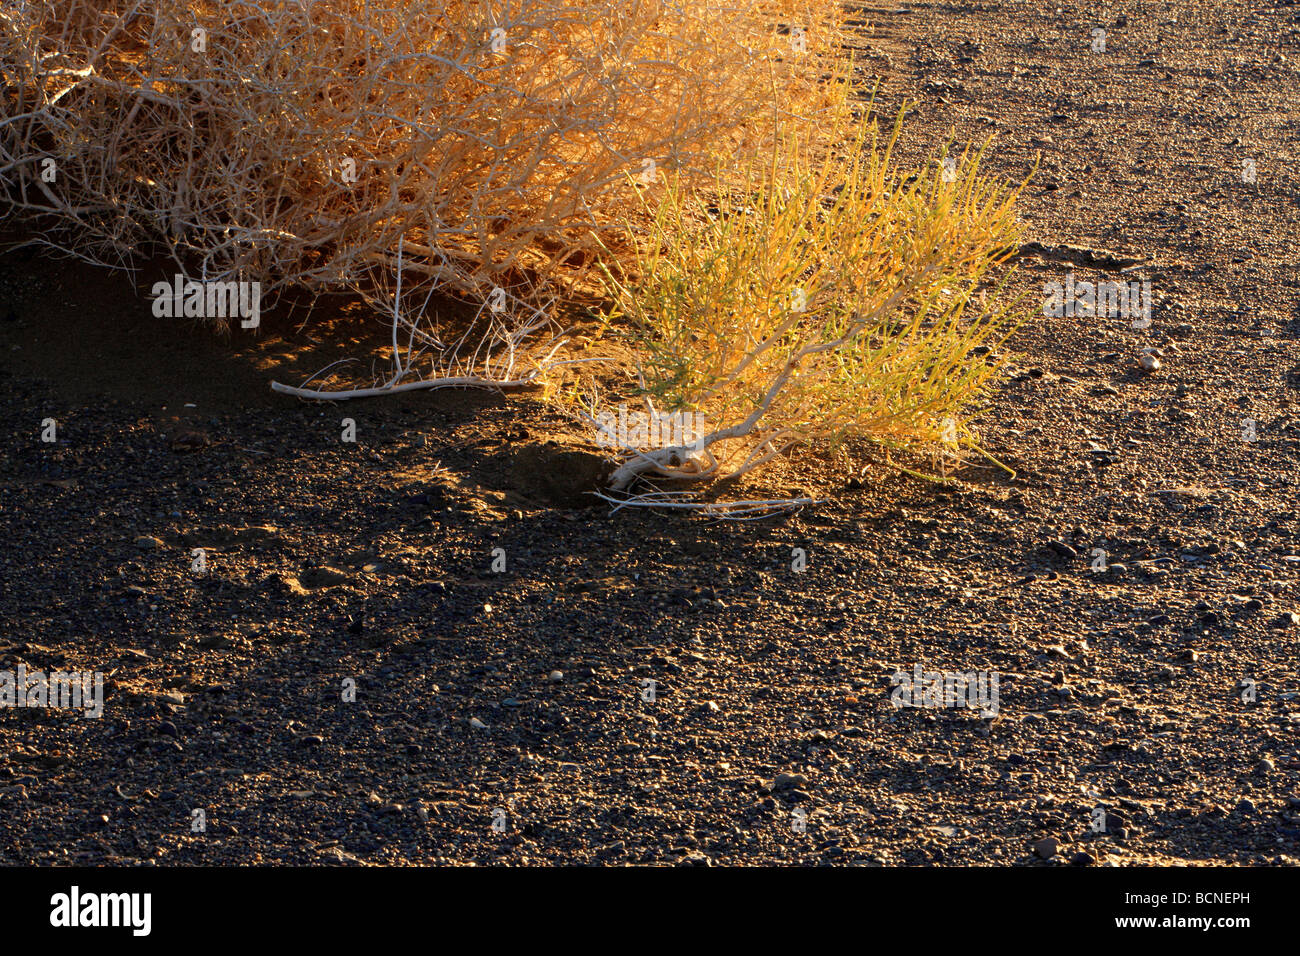 Desert in Mori Kazakh Autonomous County, Changji Hui Autonomous Prefecture, Xinjiang Uyghur Autonomous Region, China Stock Photo